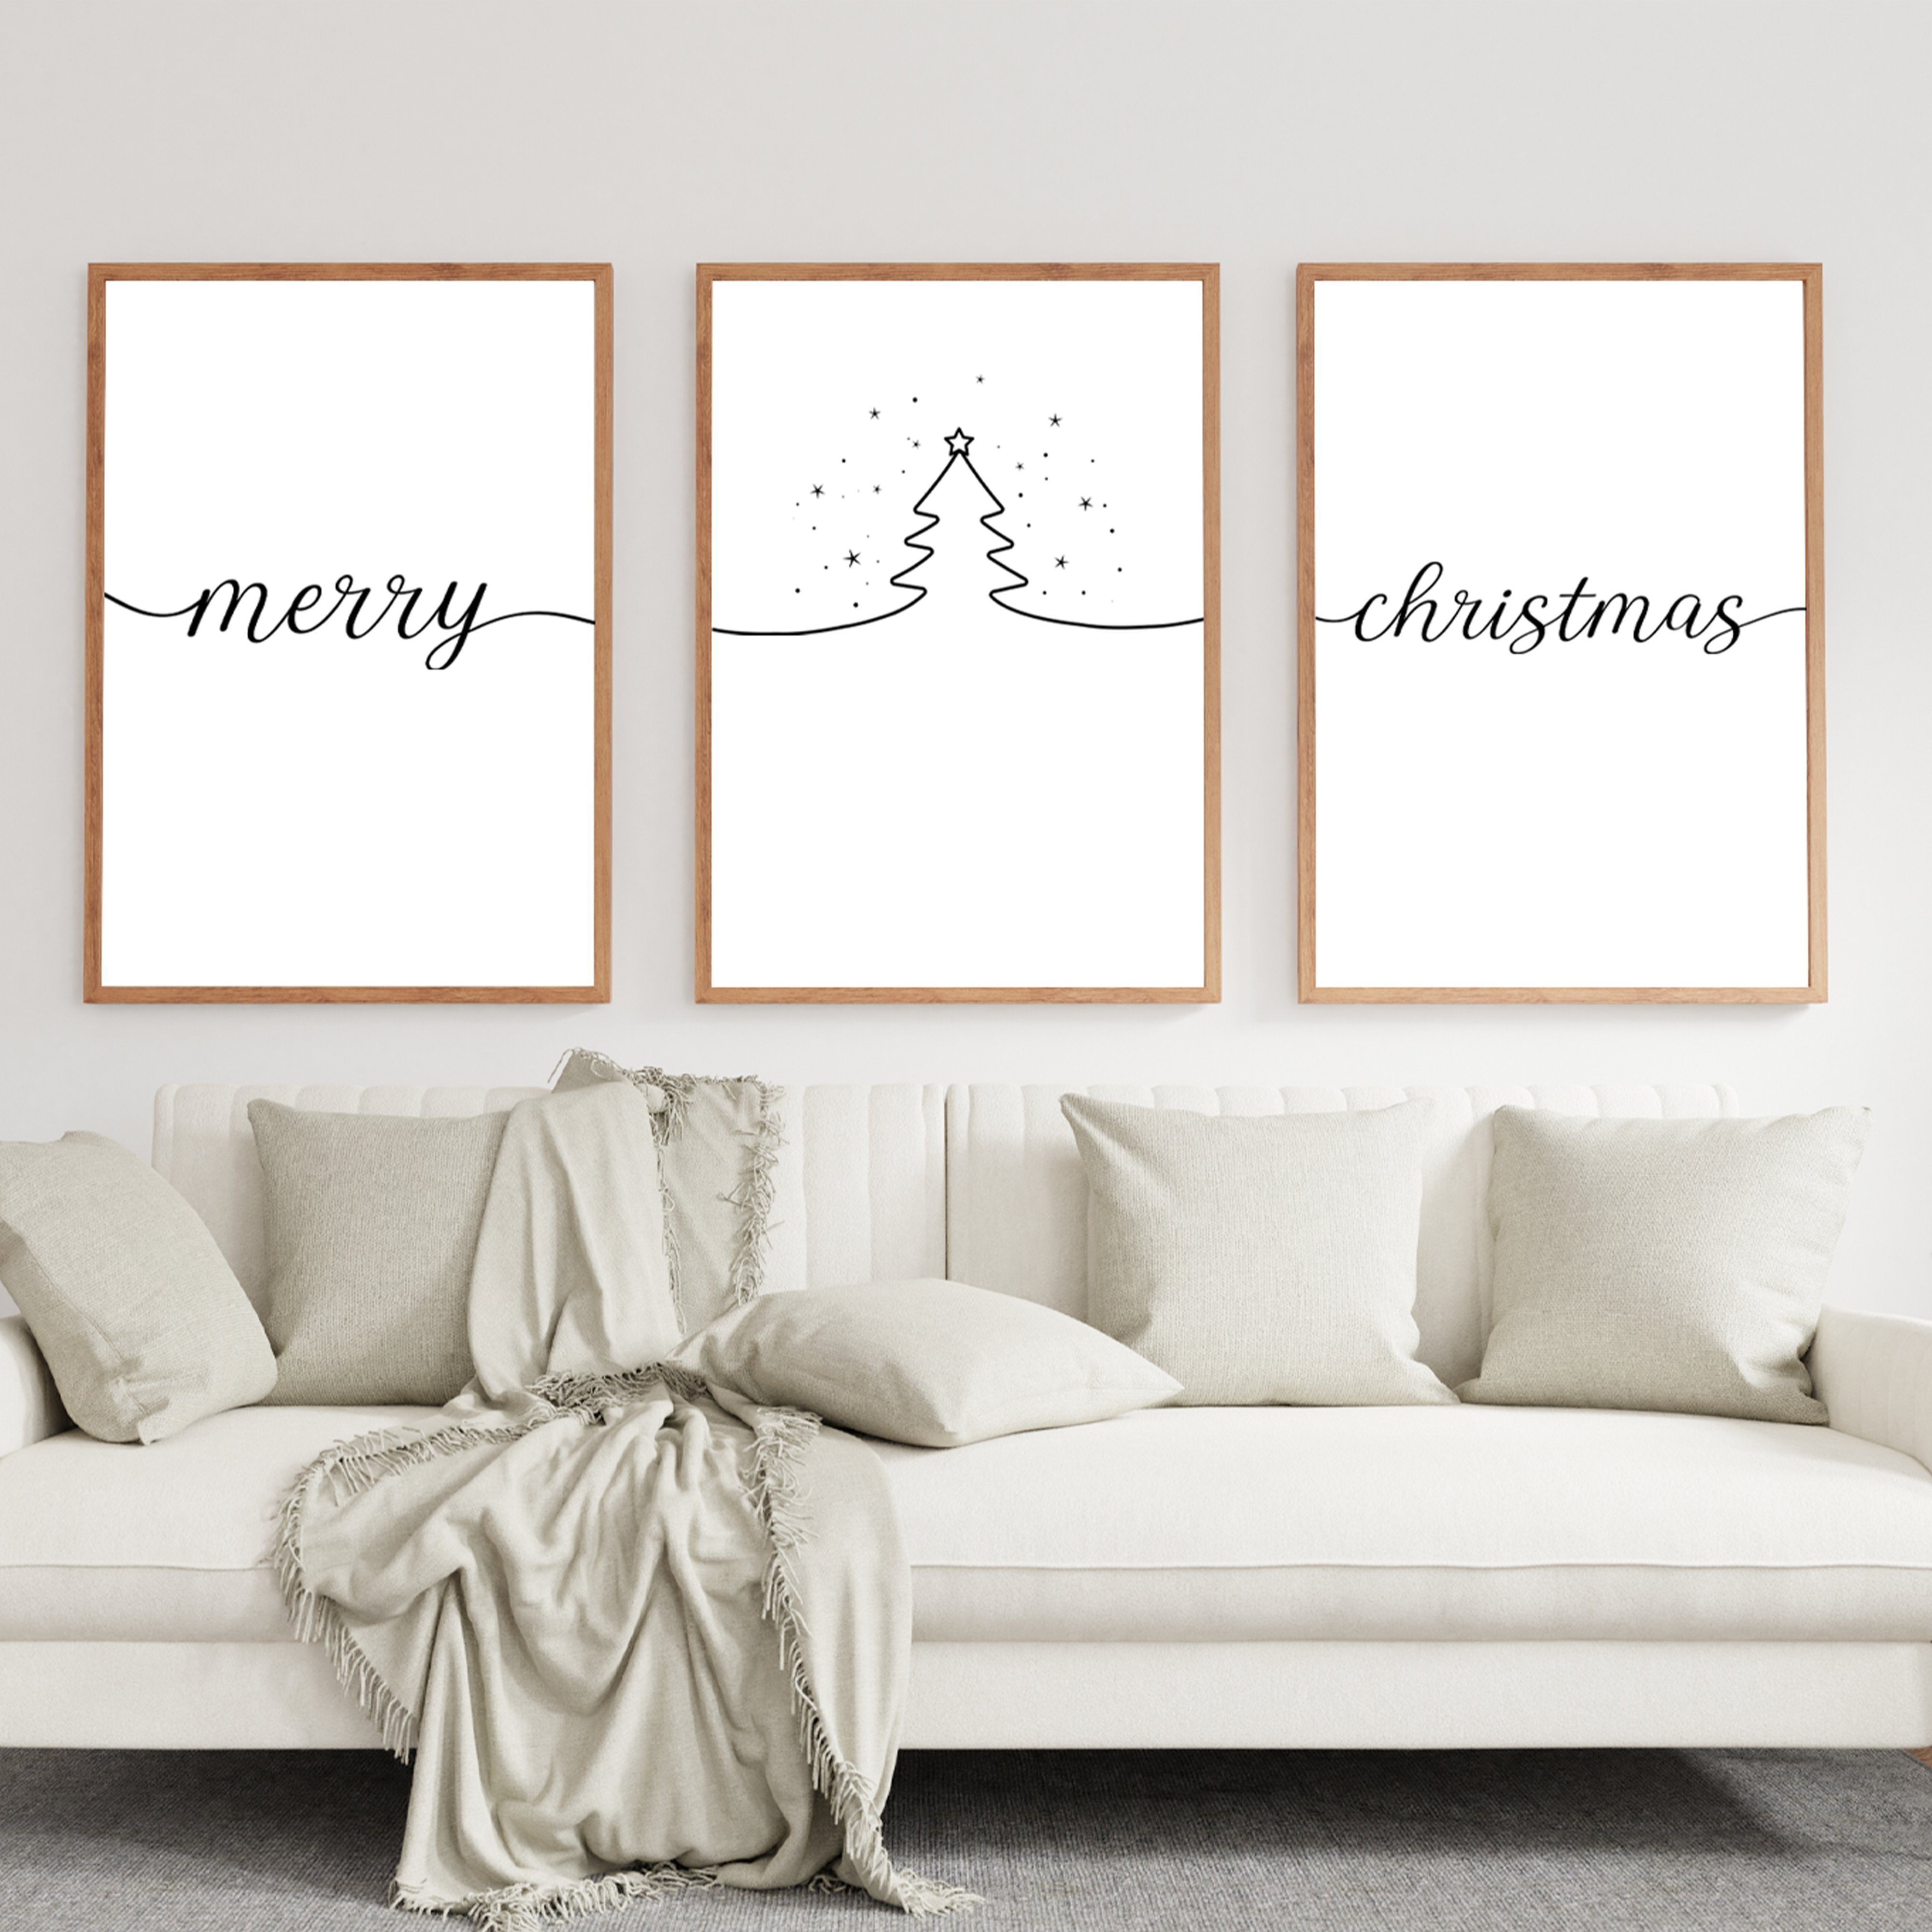 【Favorit】 Tigerlino Poster Weihnachten 3er Weihnachtsbaum Wandbild Merry Christmas Set Wanddeko